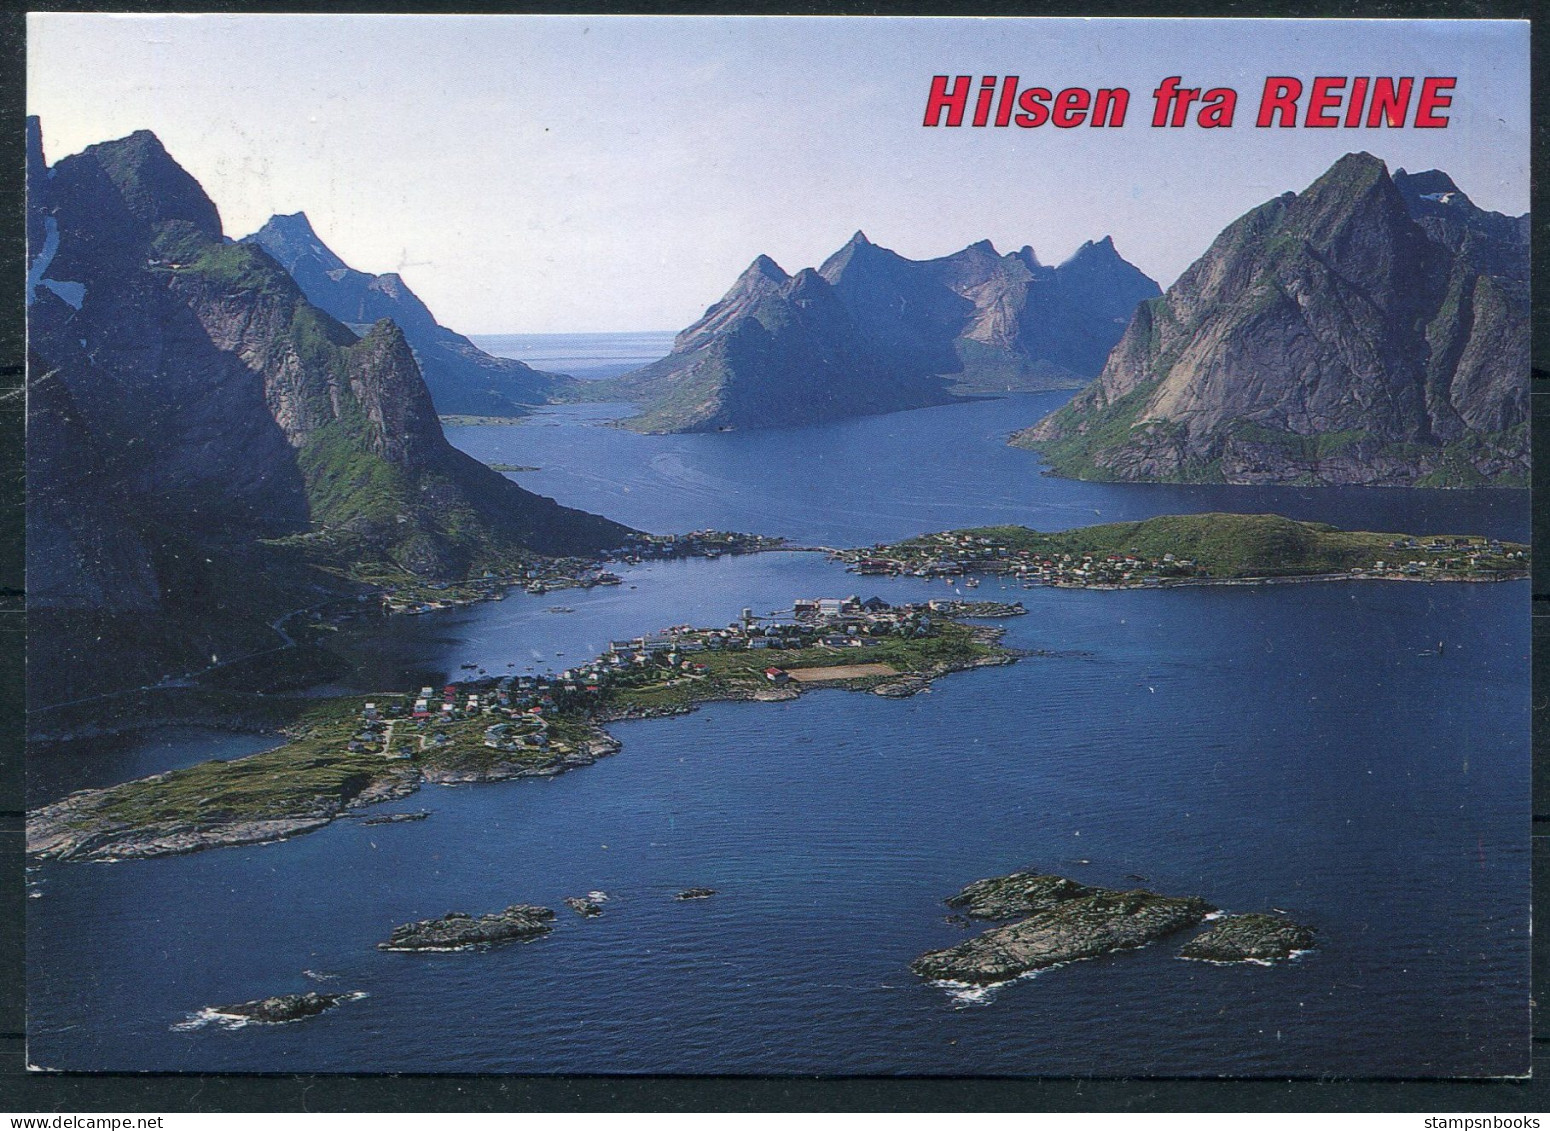 1999 Norway M/S VESTERALEN OVDS Polarsirkelen Ship Reine Postcard - Denmark - Lettres & Documents